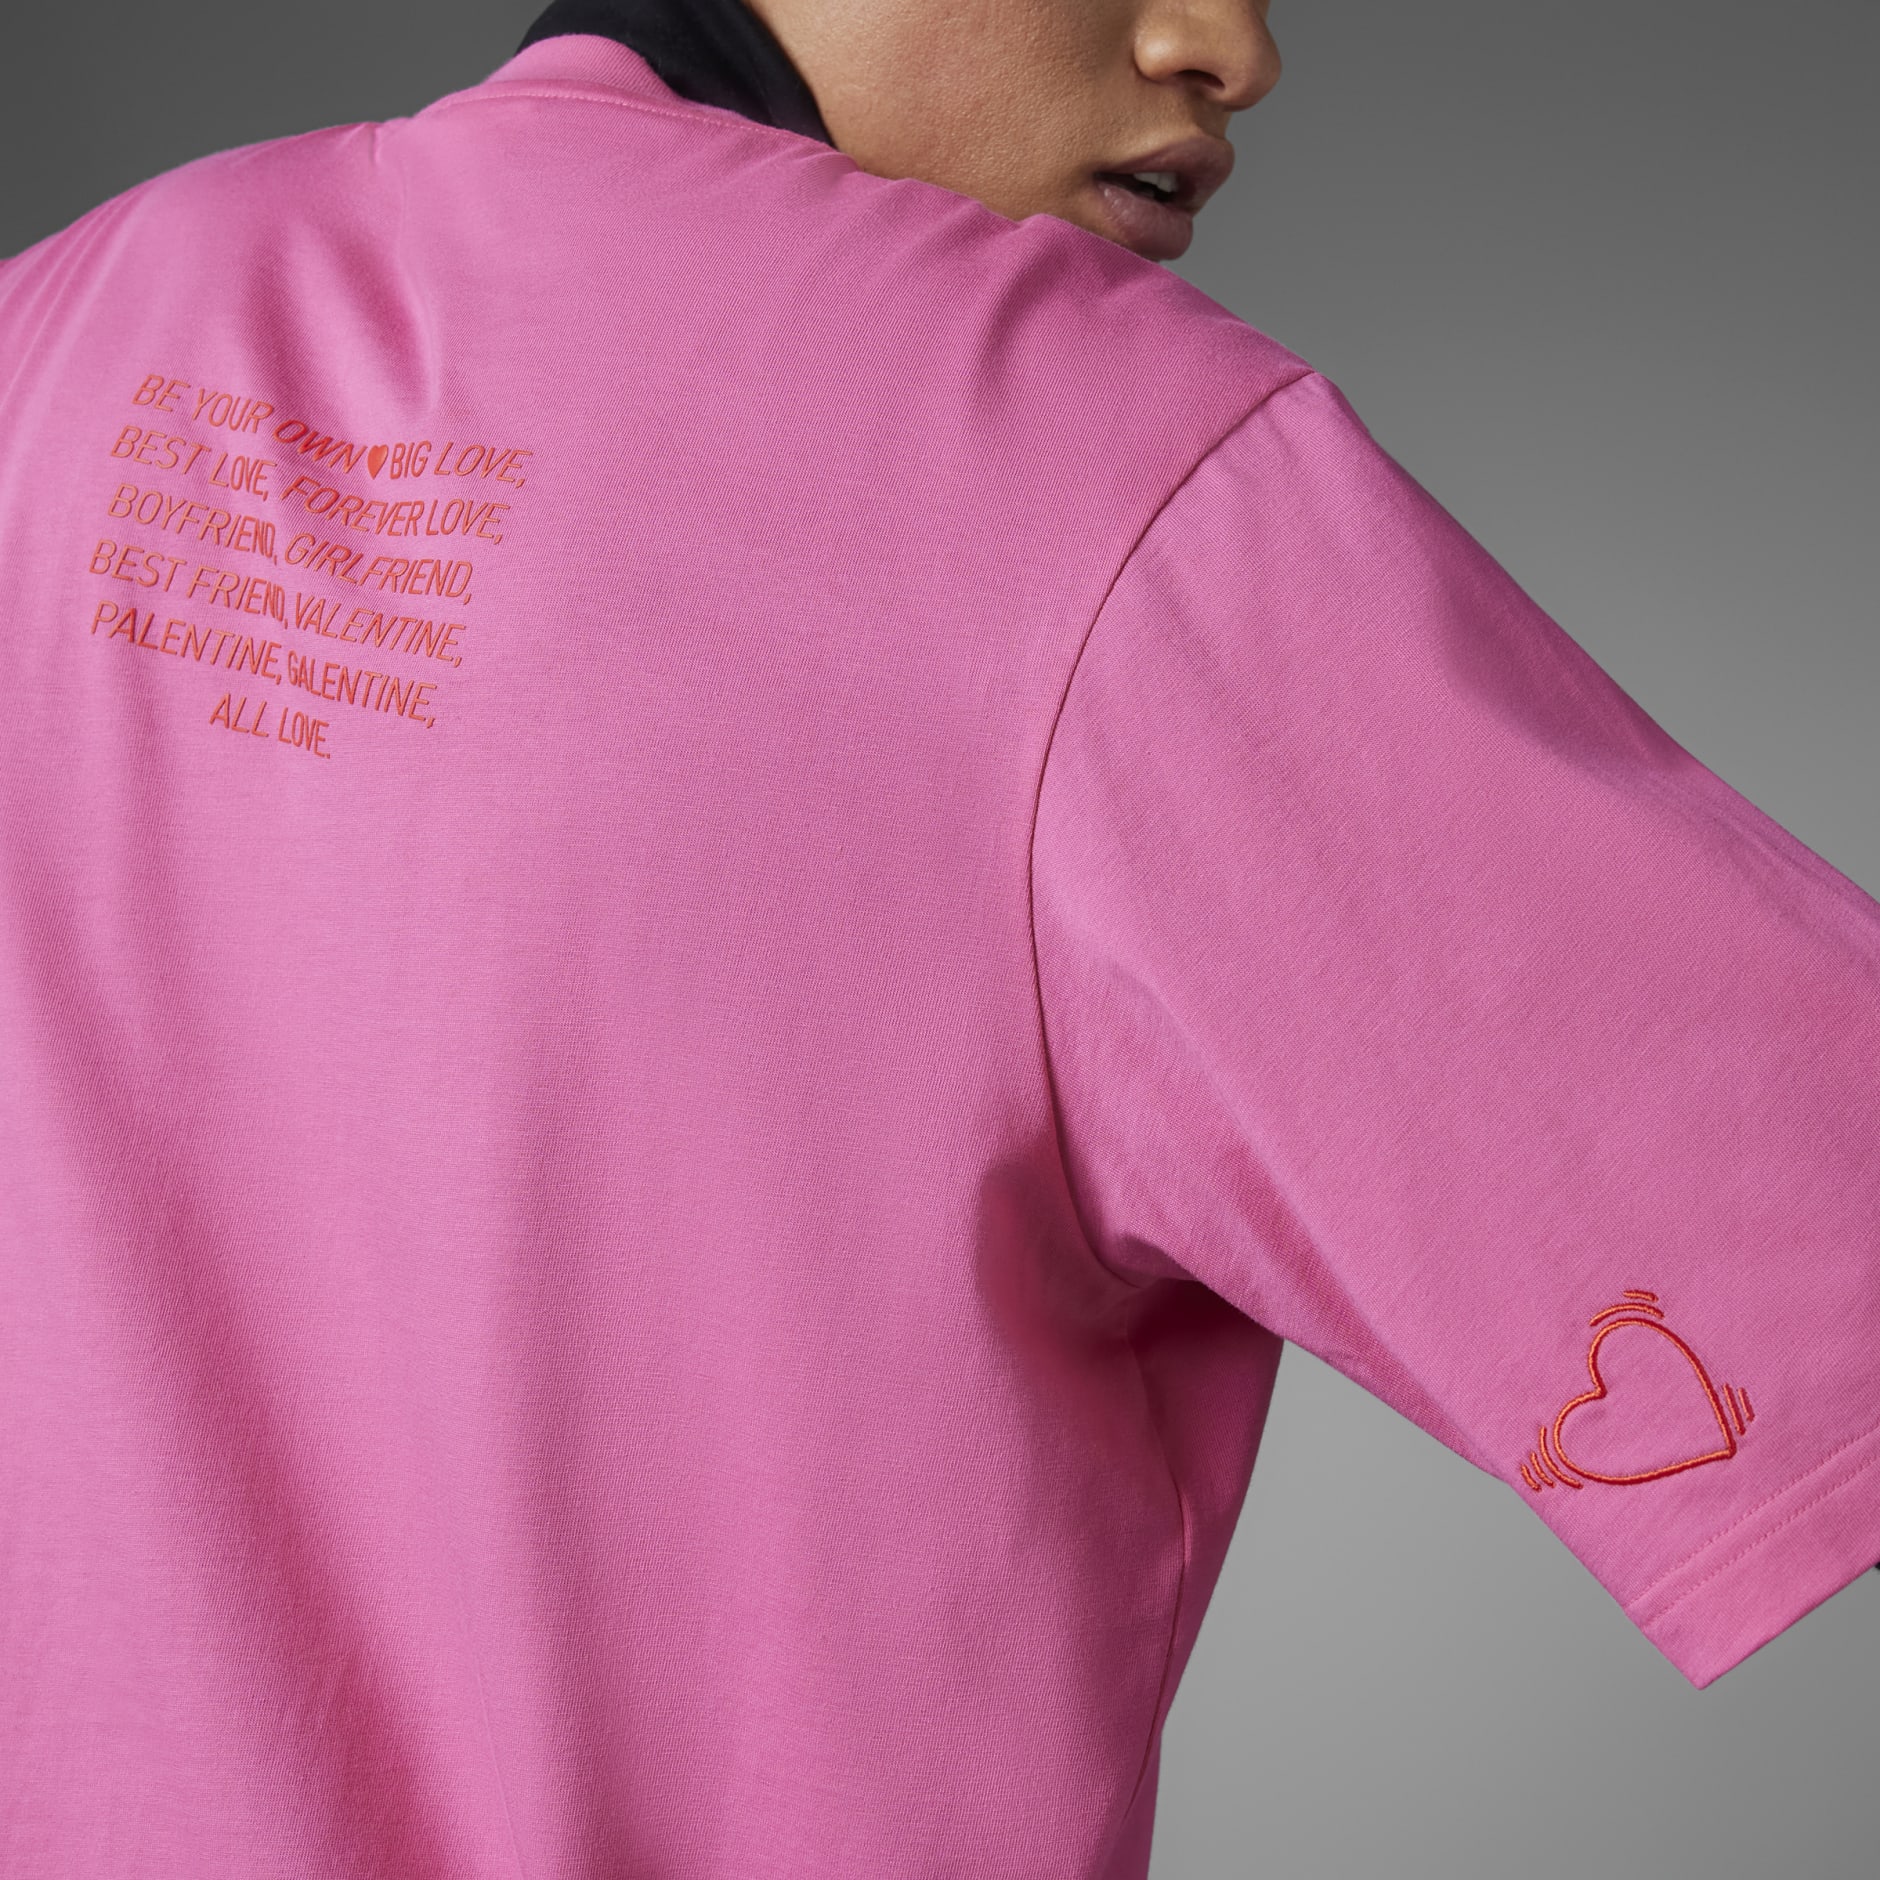 Clothing - Valentine's Day Tee - Pink | adidas Qatar